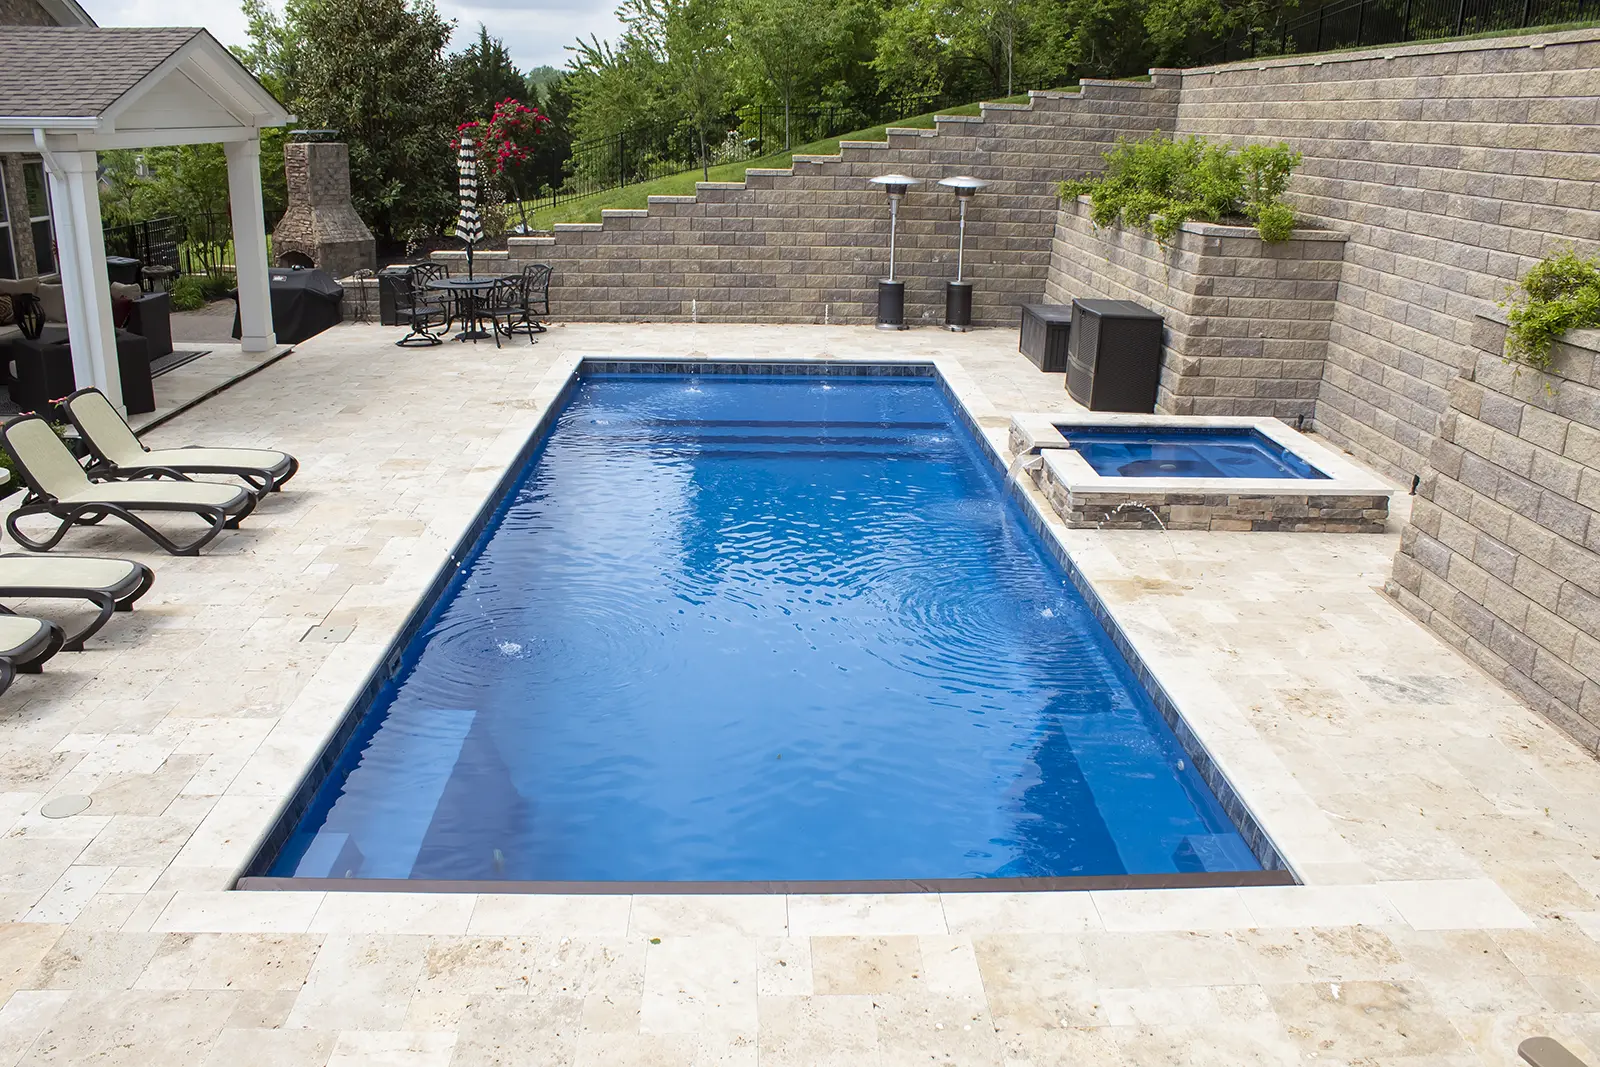 The Leisure Pools Pinnacle™ - a superb inground pool installation